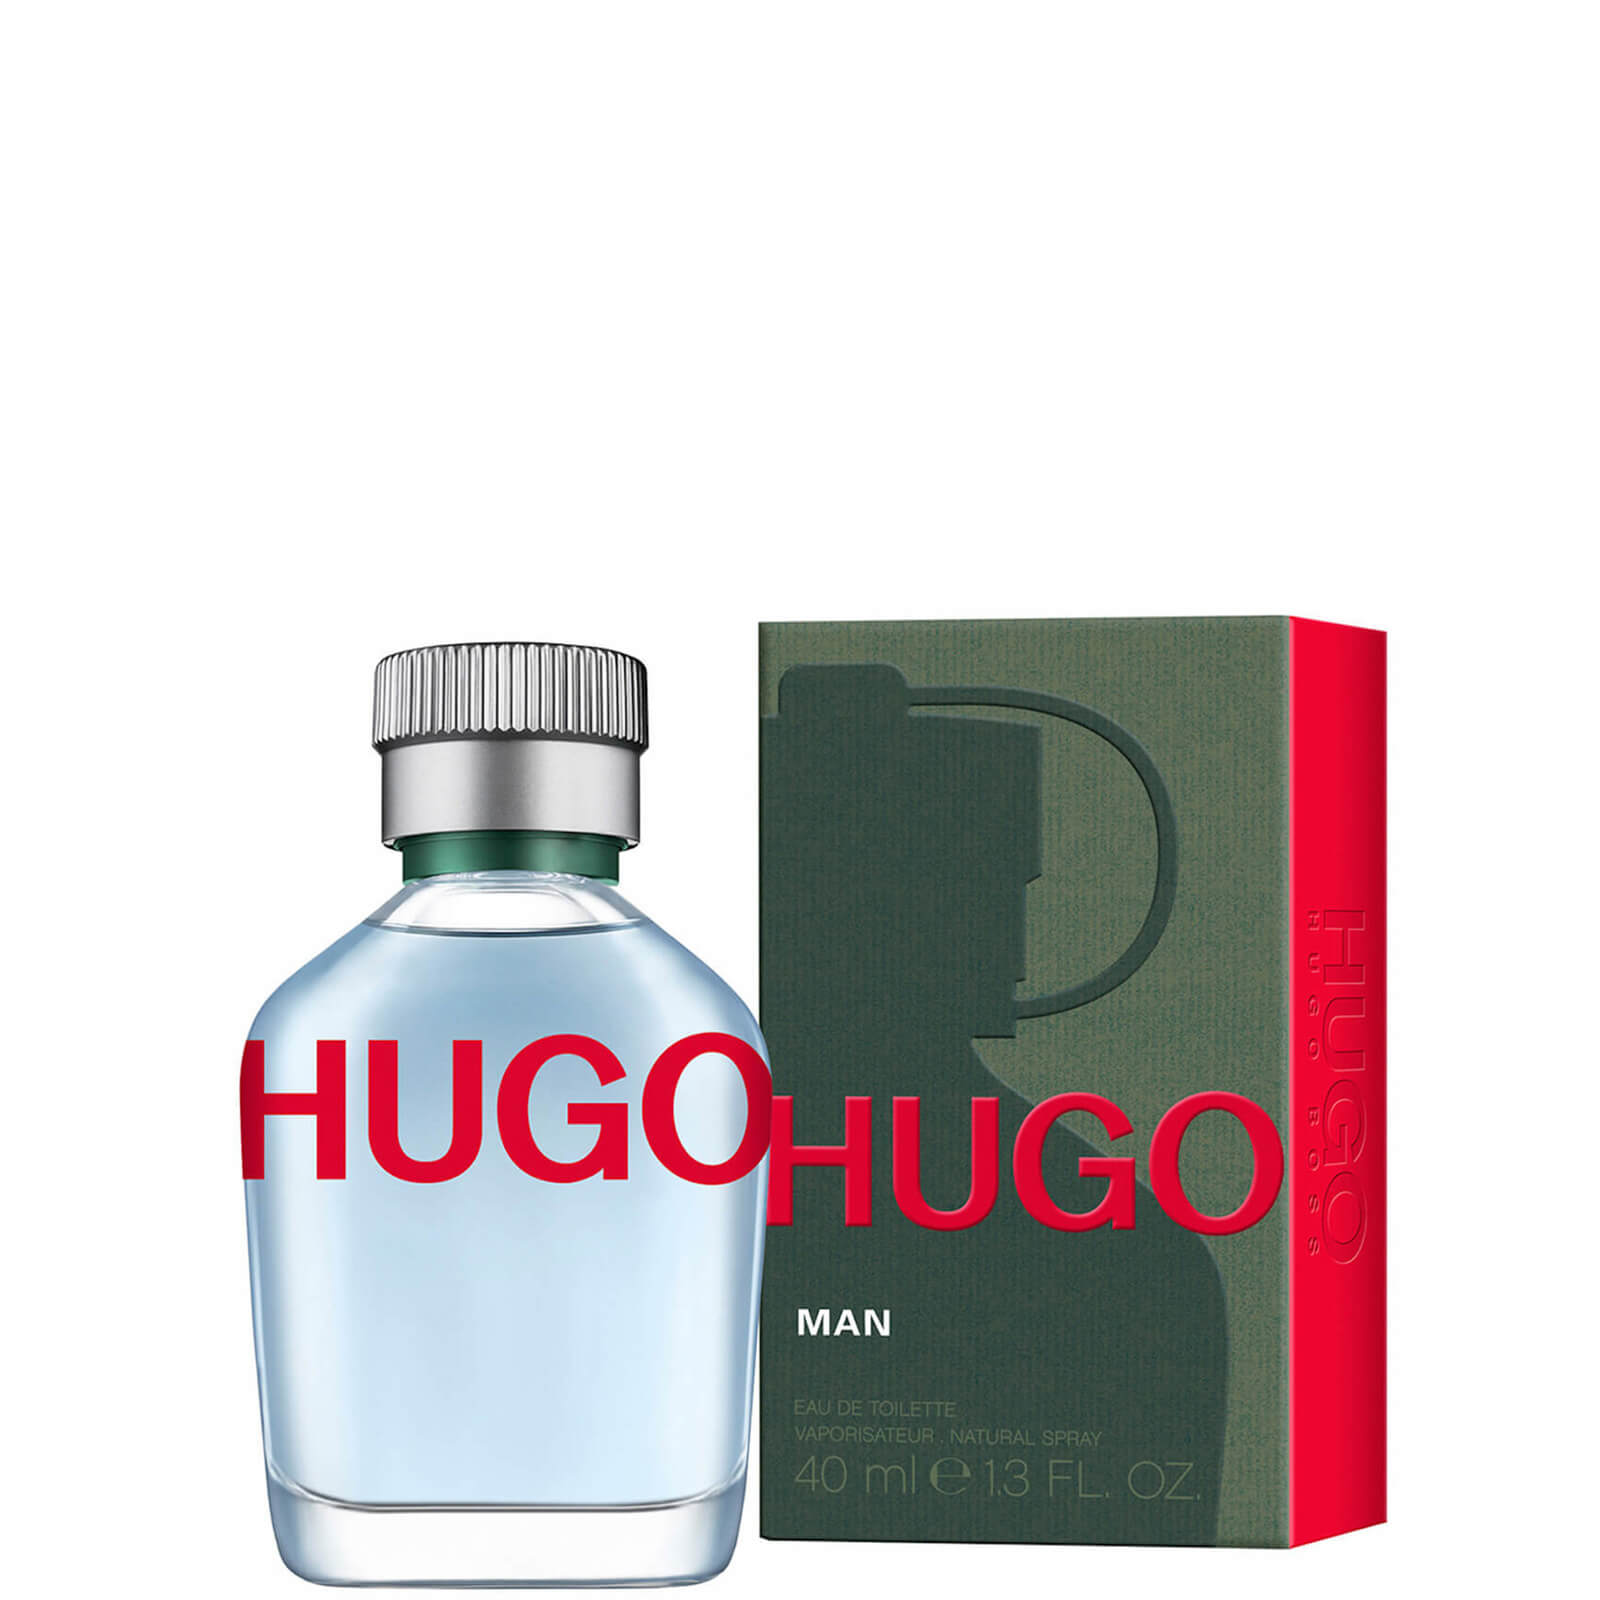 Hugo Boss Hugo Man Eau de toilette spray 40 ml